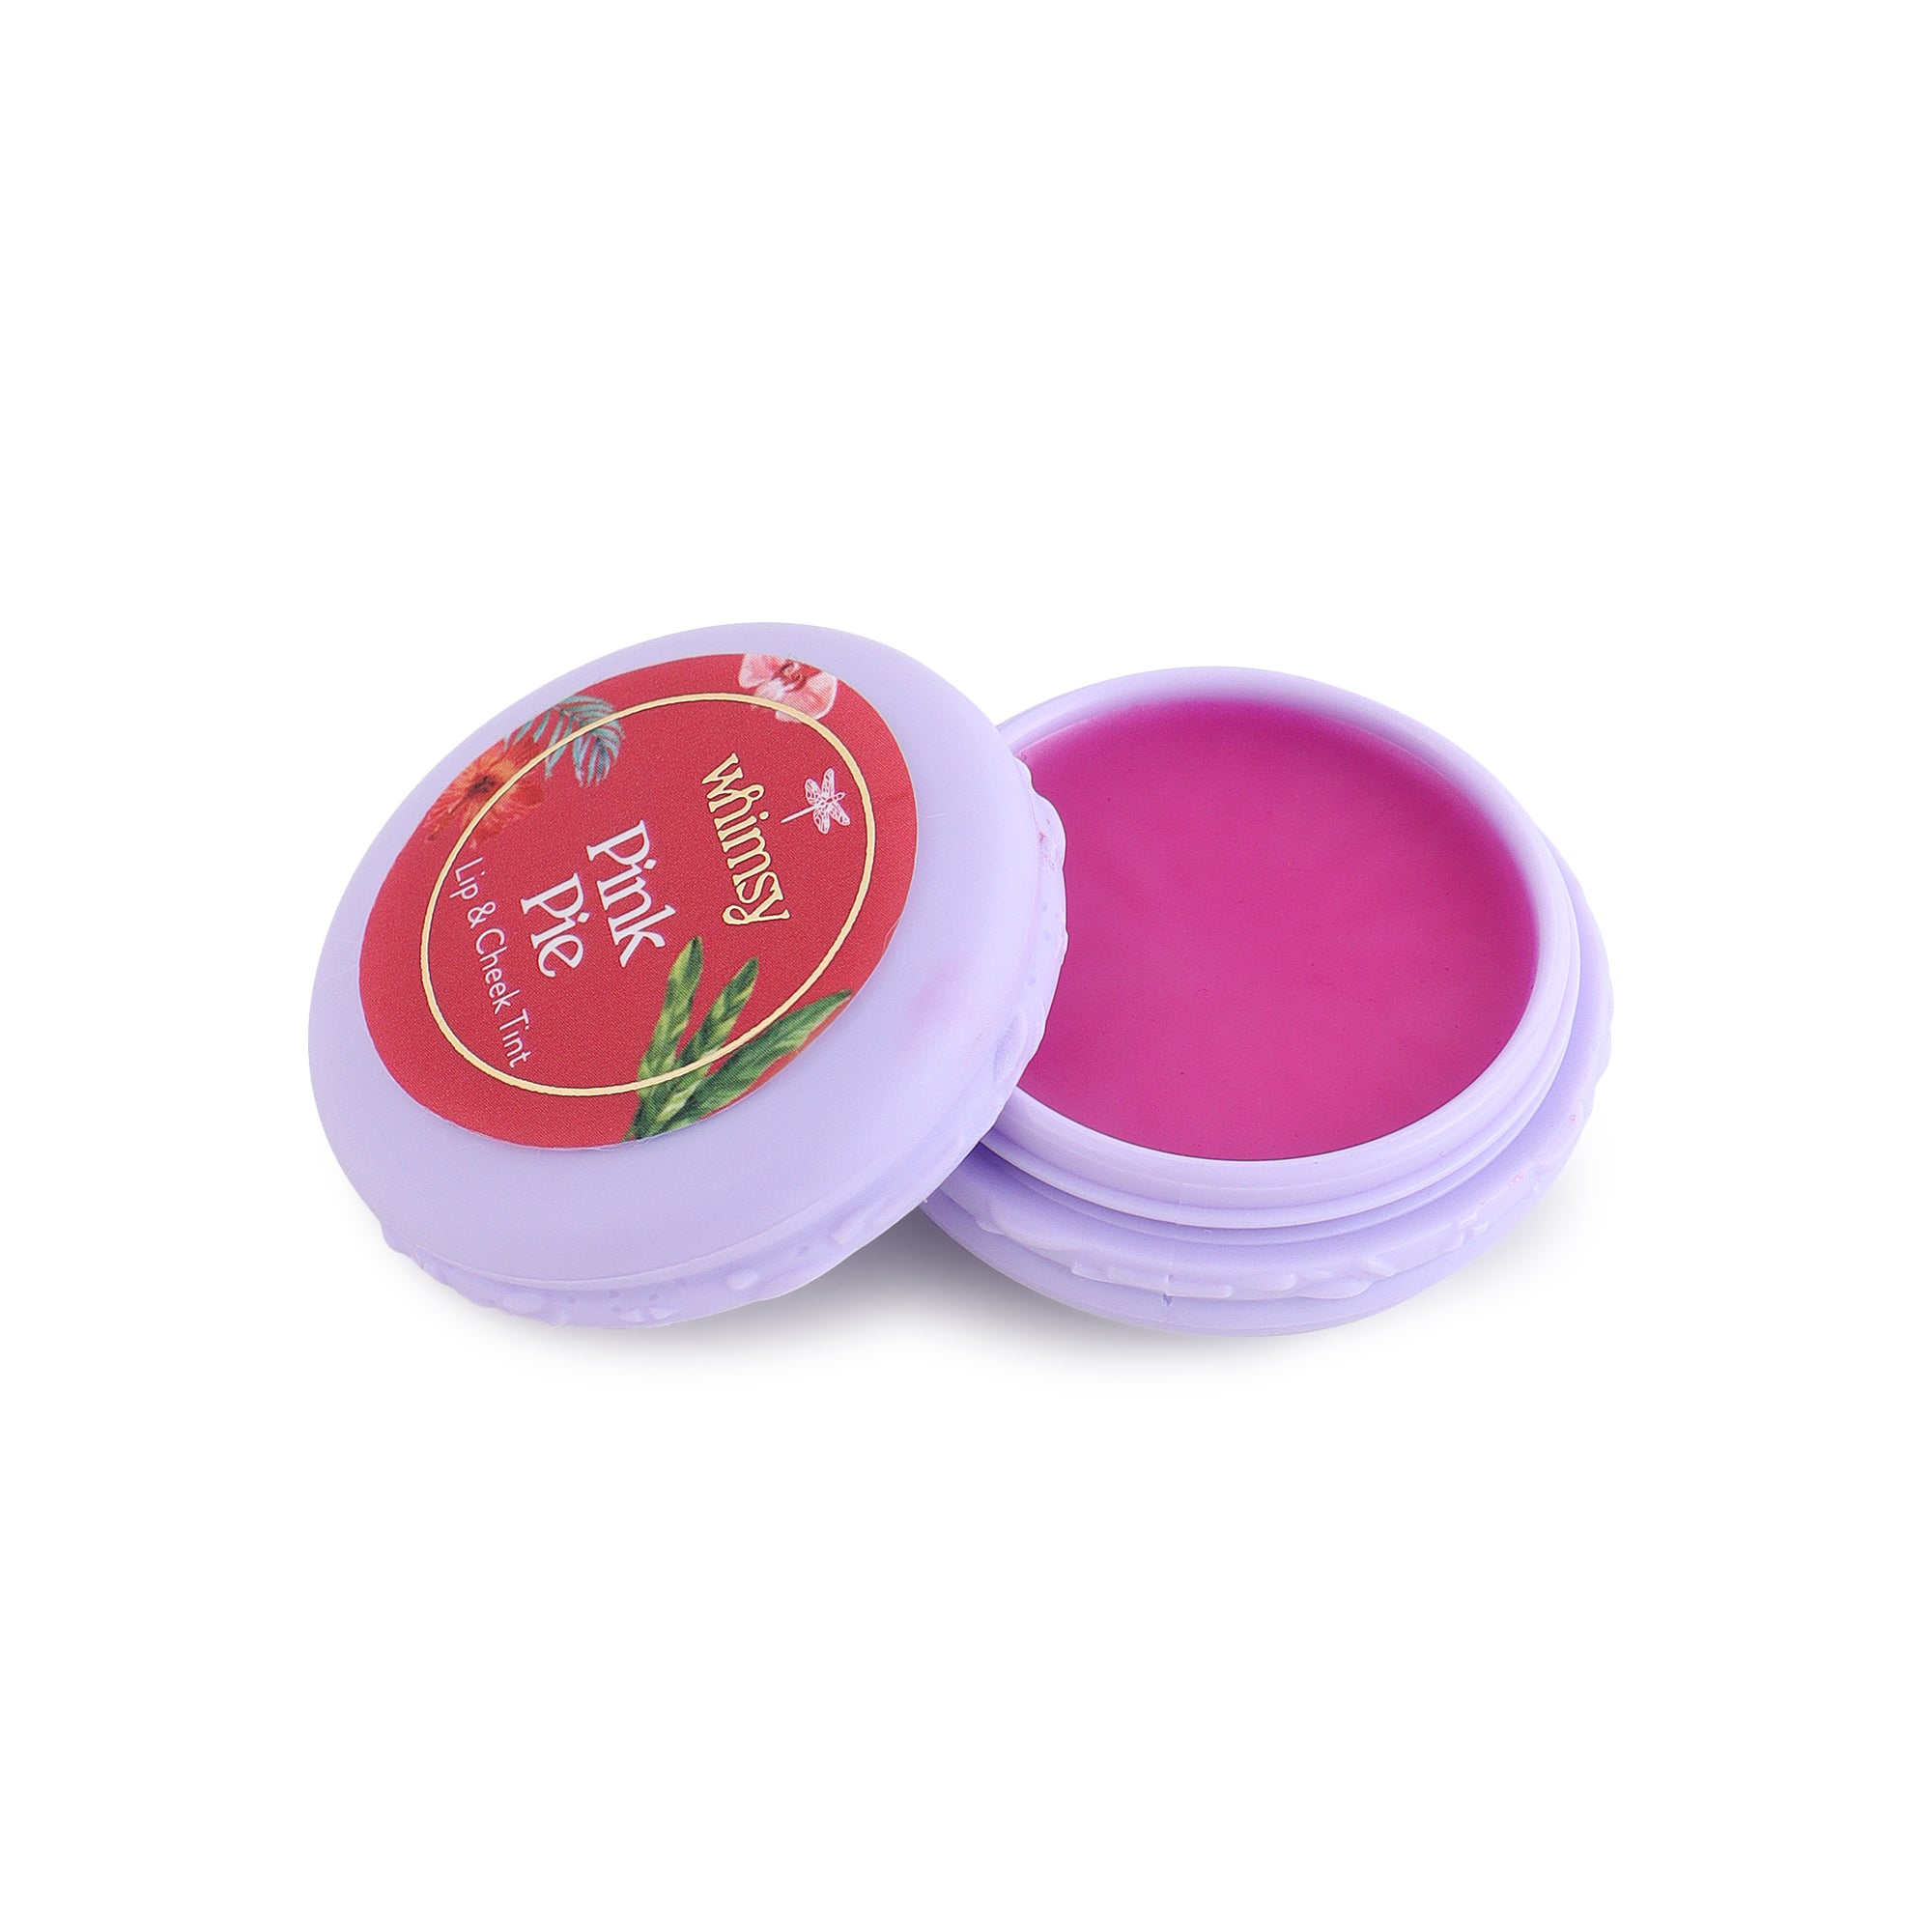 Combo of - Glitter ‘N’ Go - Lip Gloss and Pink Pie- Lip & Cheek Tint For Teen Girls